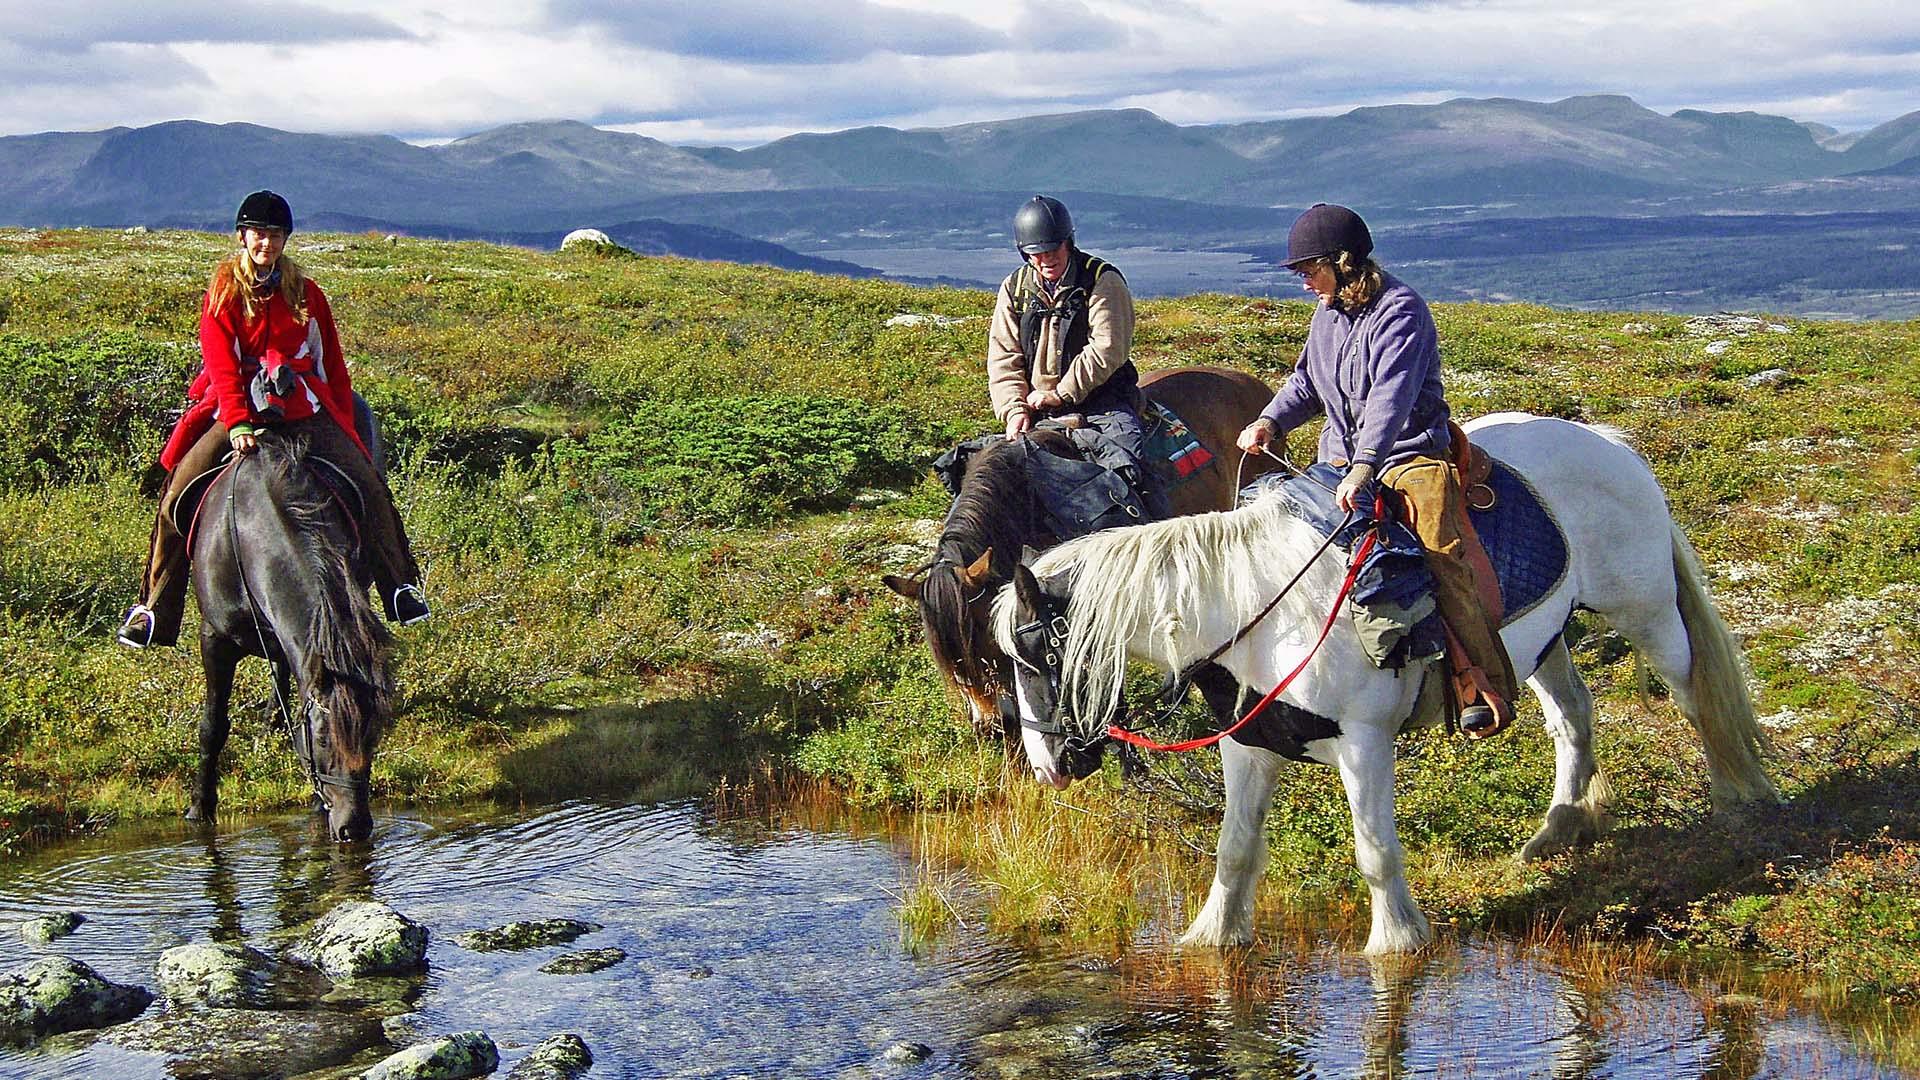 Three horseback riders cross a stream in open mountain terrain.